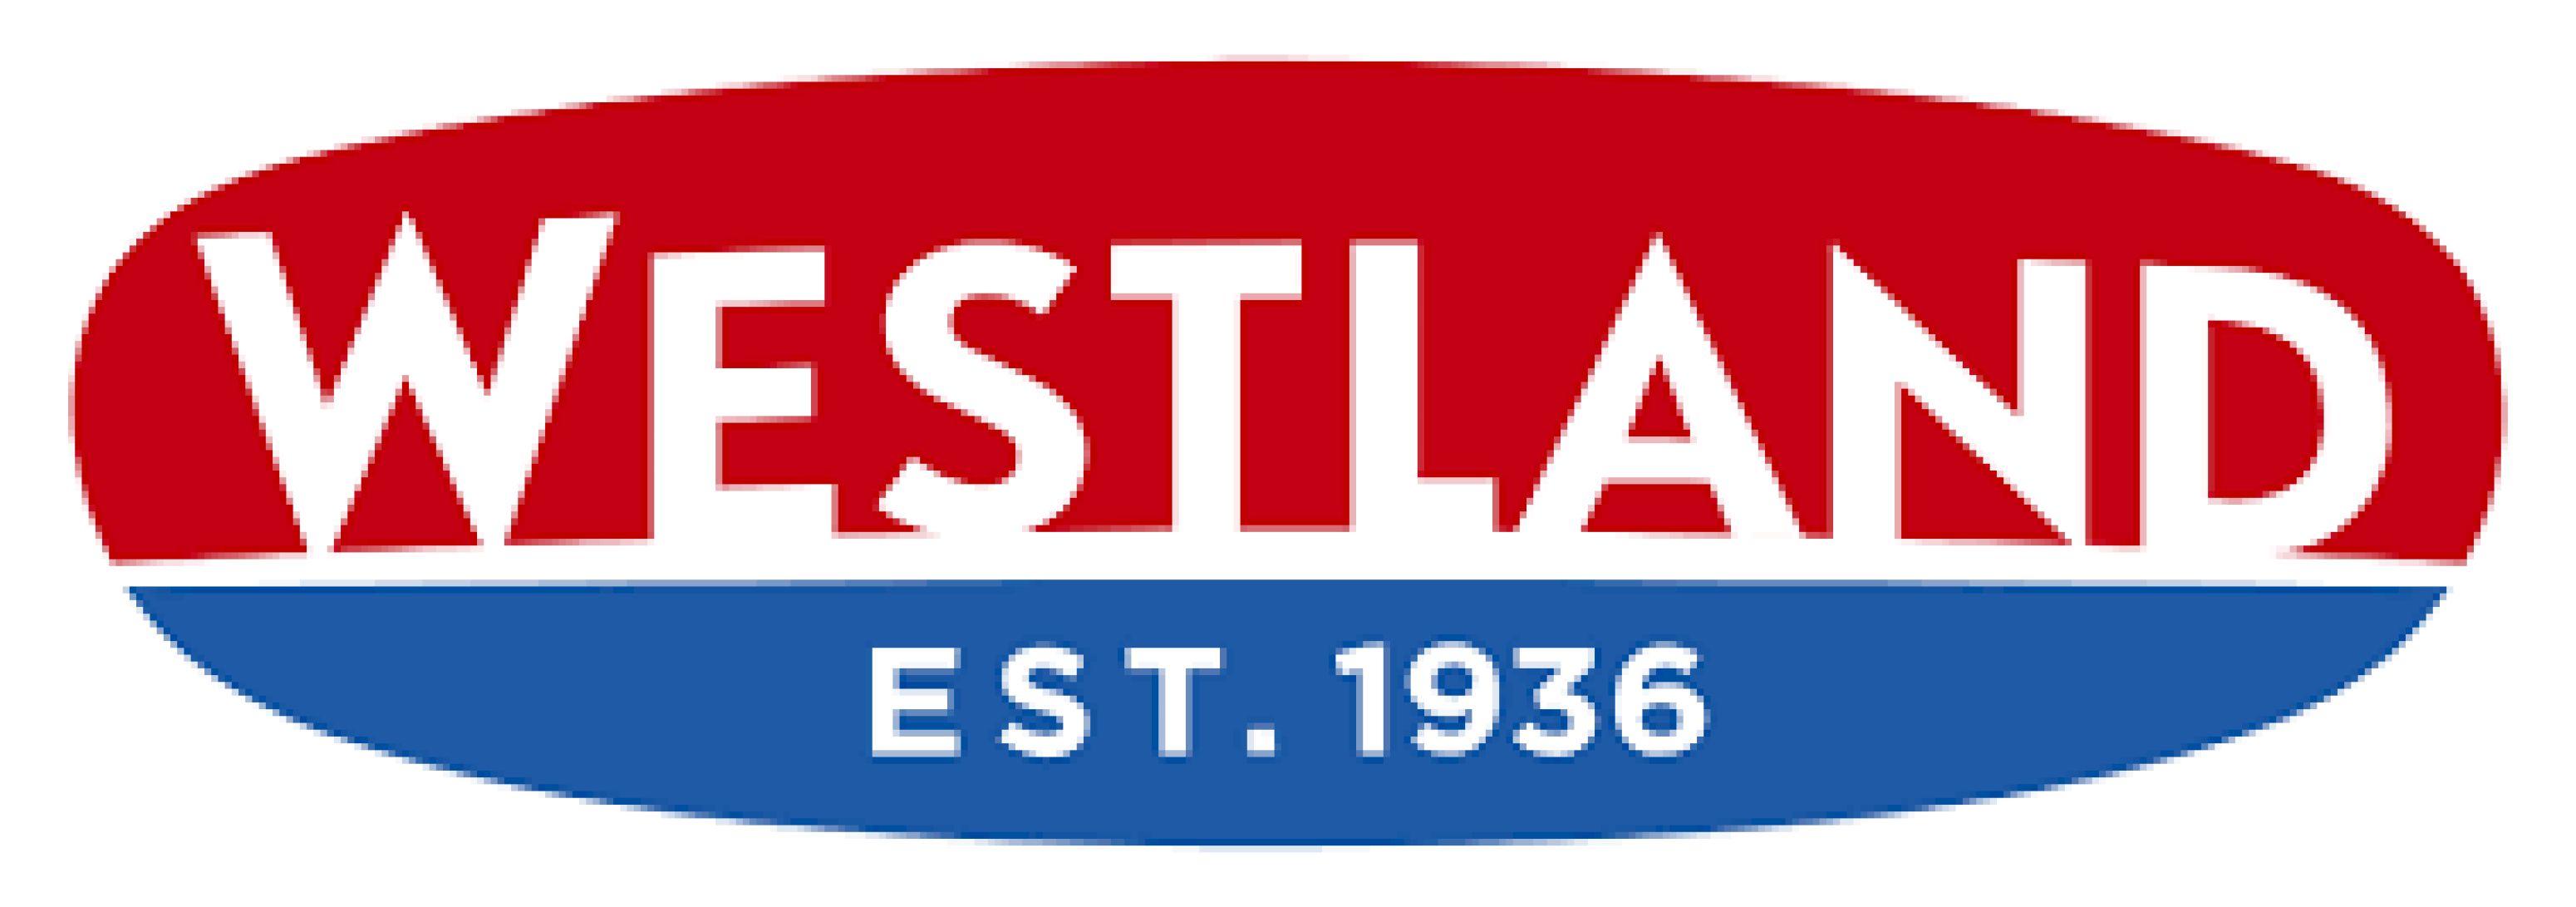 Westlandkaas logo